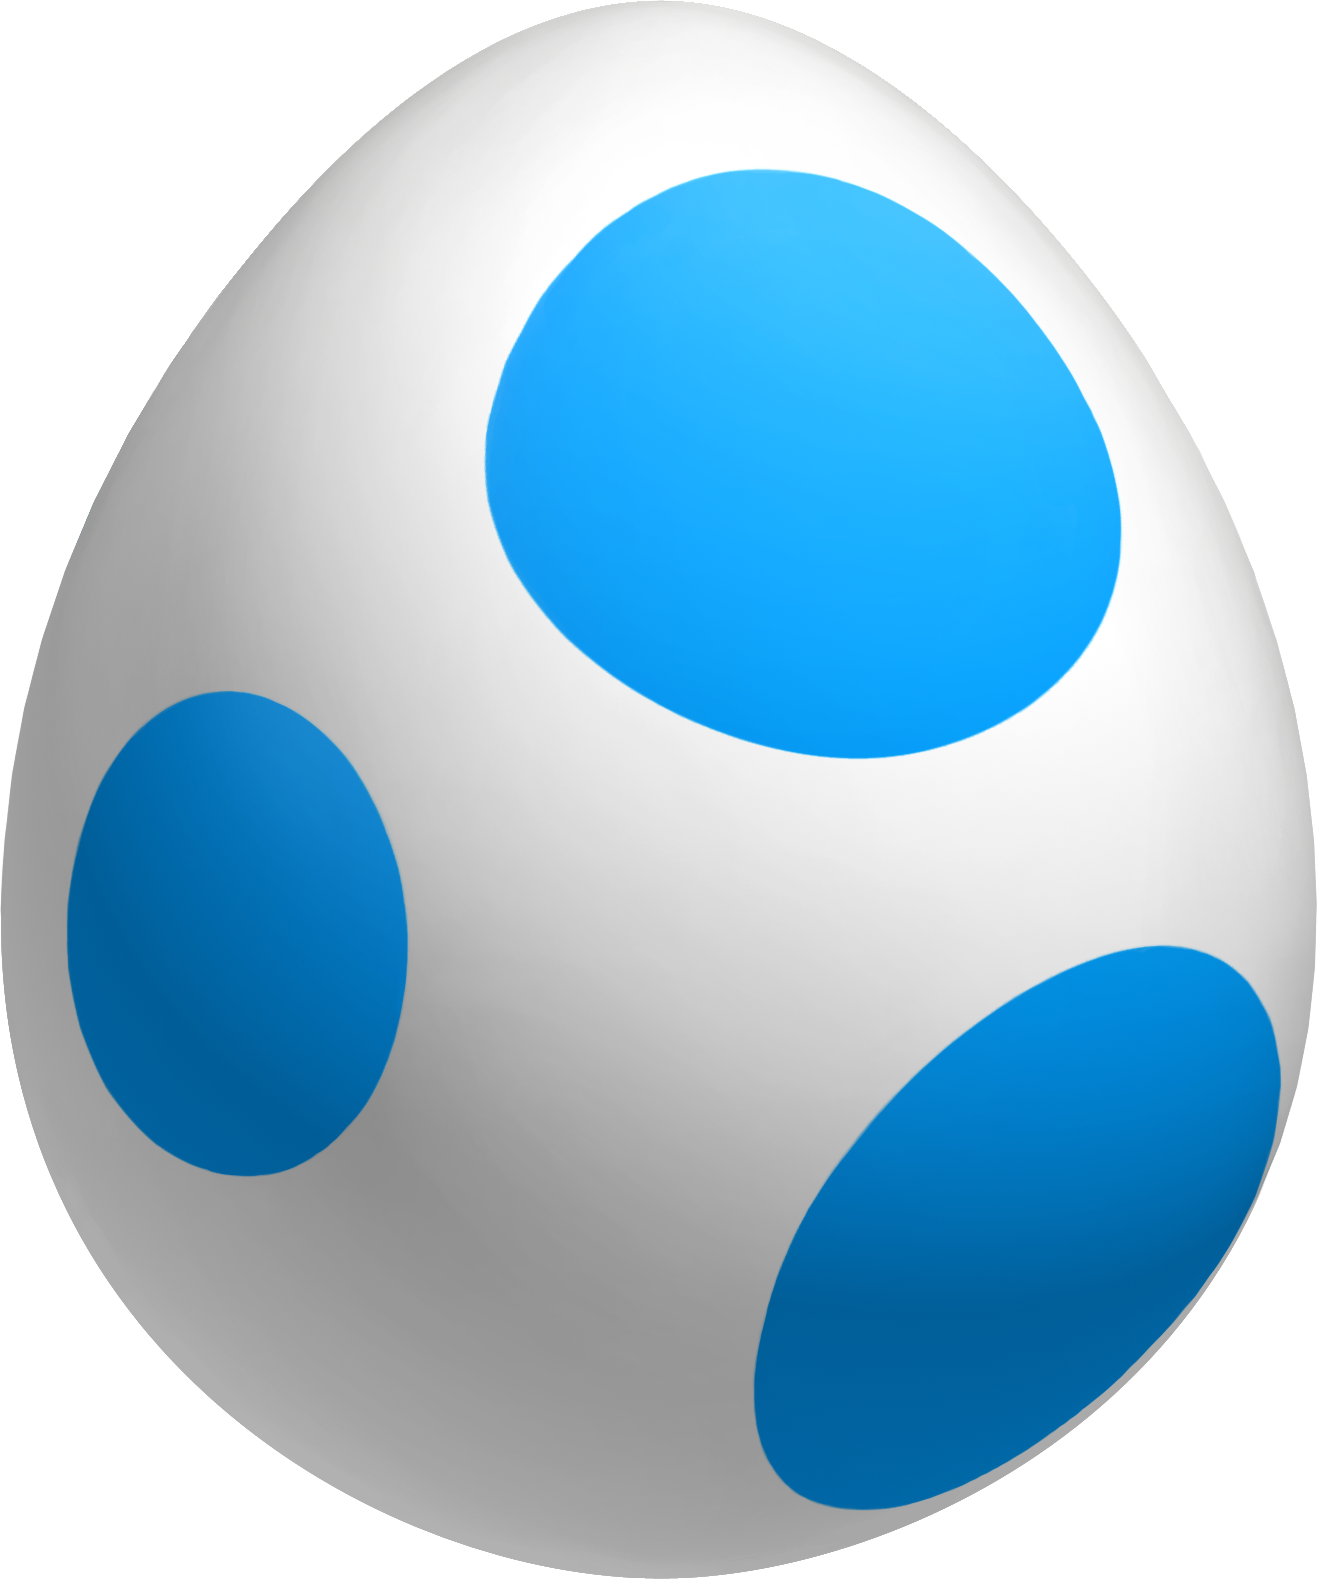 Light Blue Yoshi egg